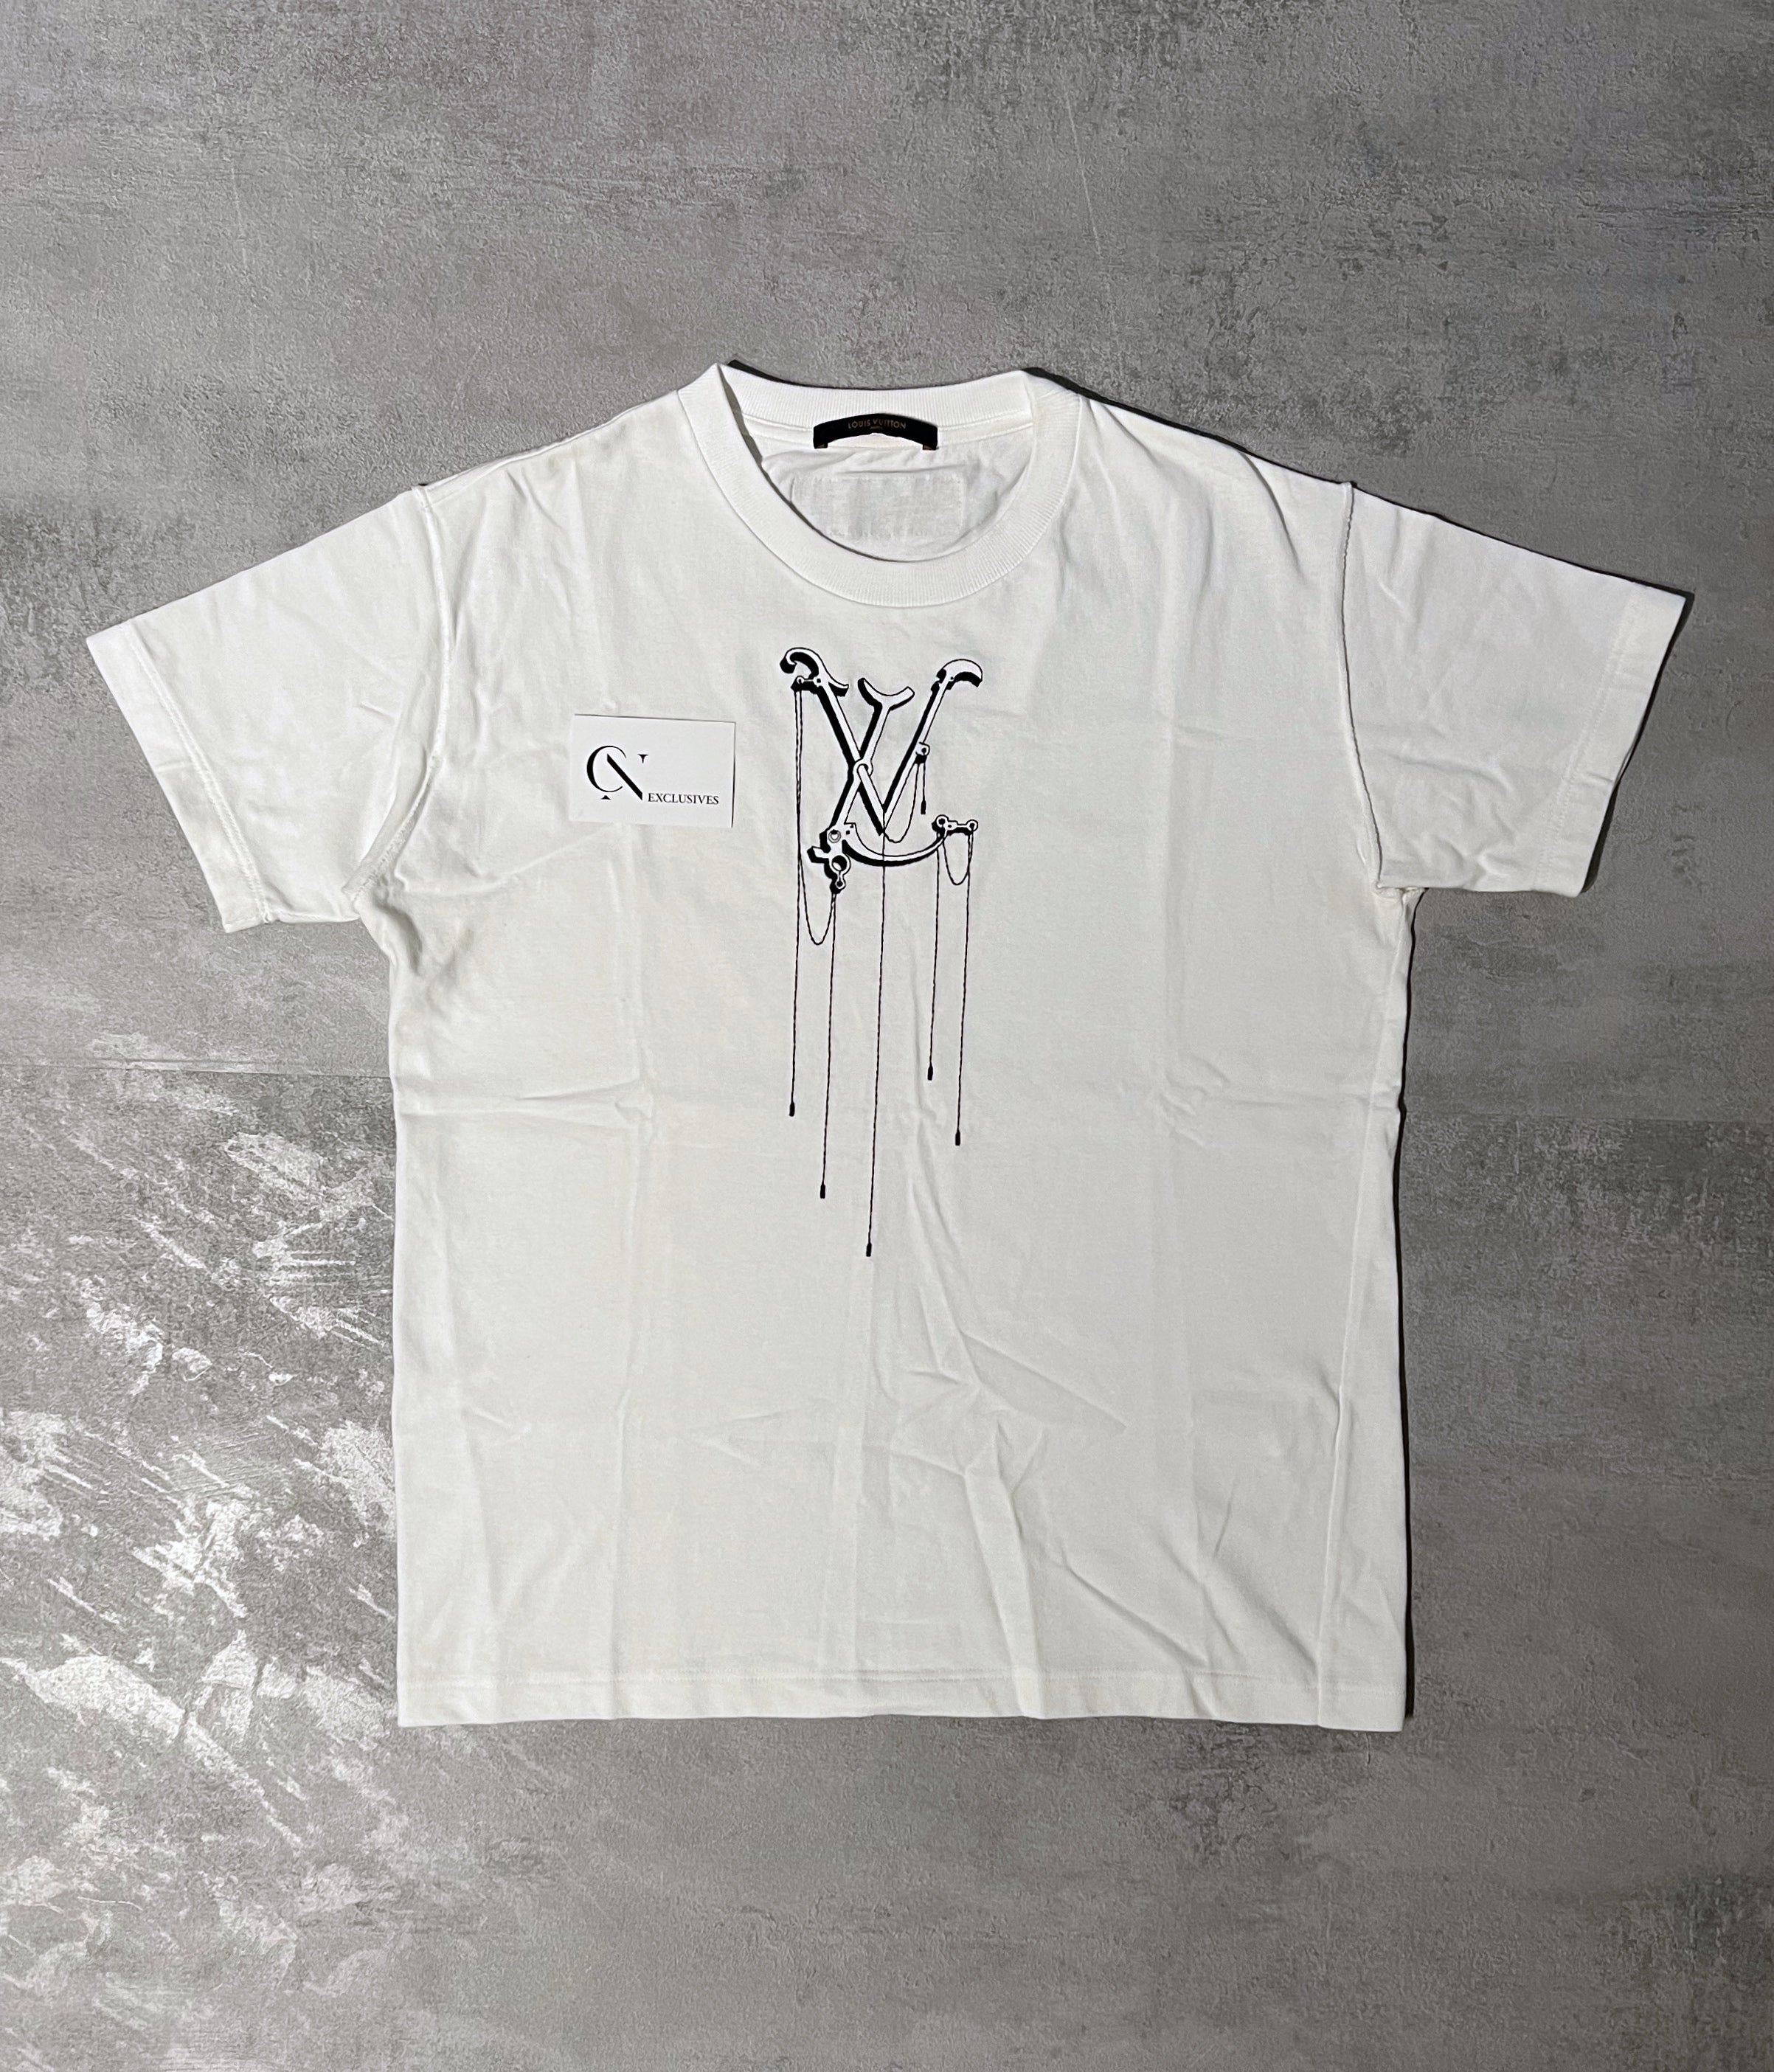 LOUIS VUITTON FORNASETTI 2021 graphic logo Vase chain trimmed cotton tshirt  S